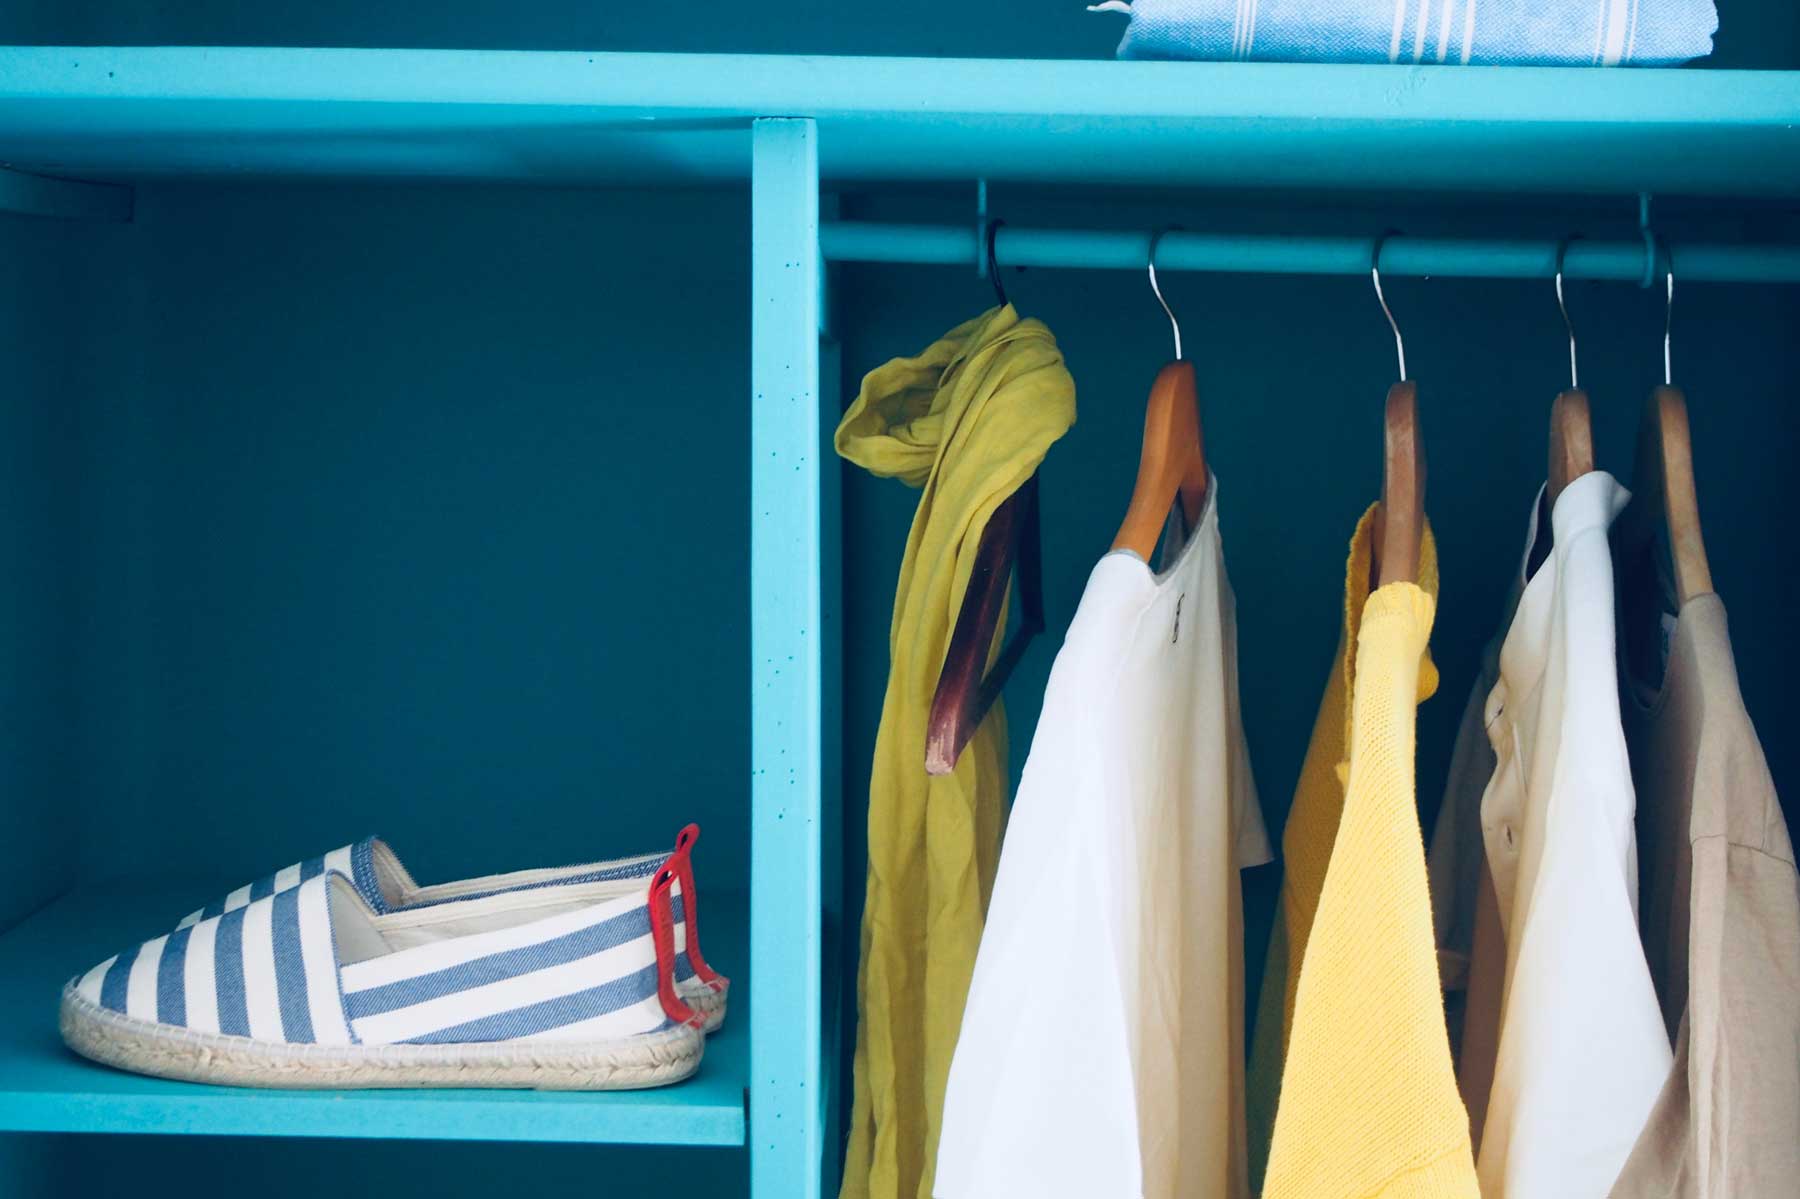 A neatly organized clothes closet